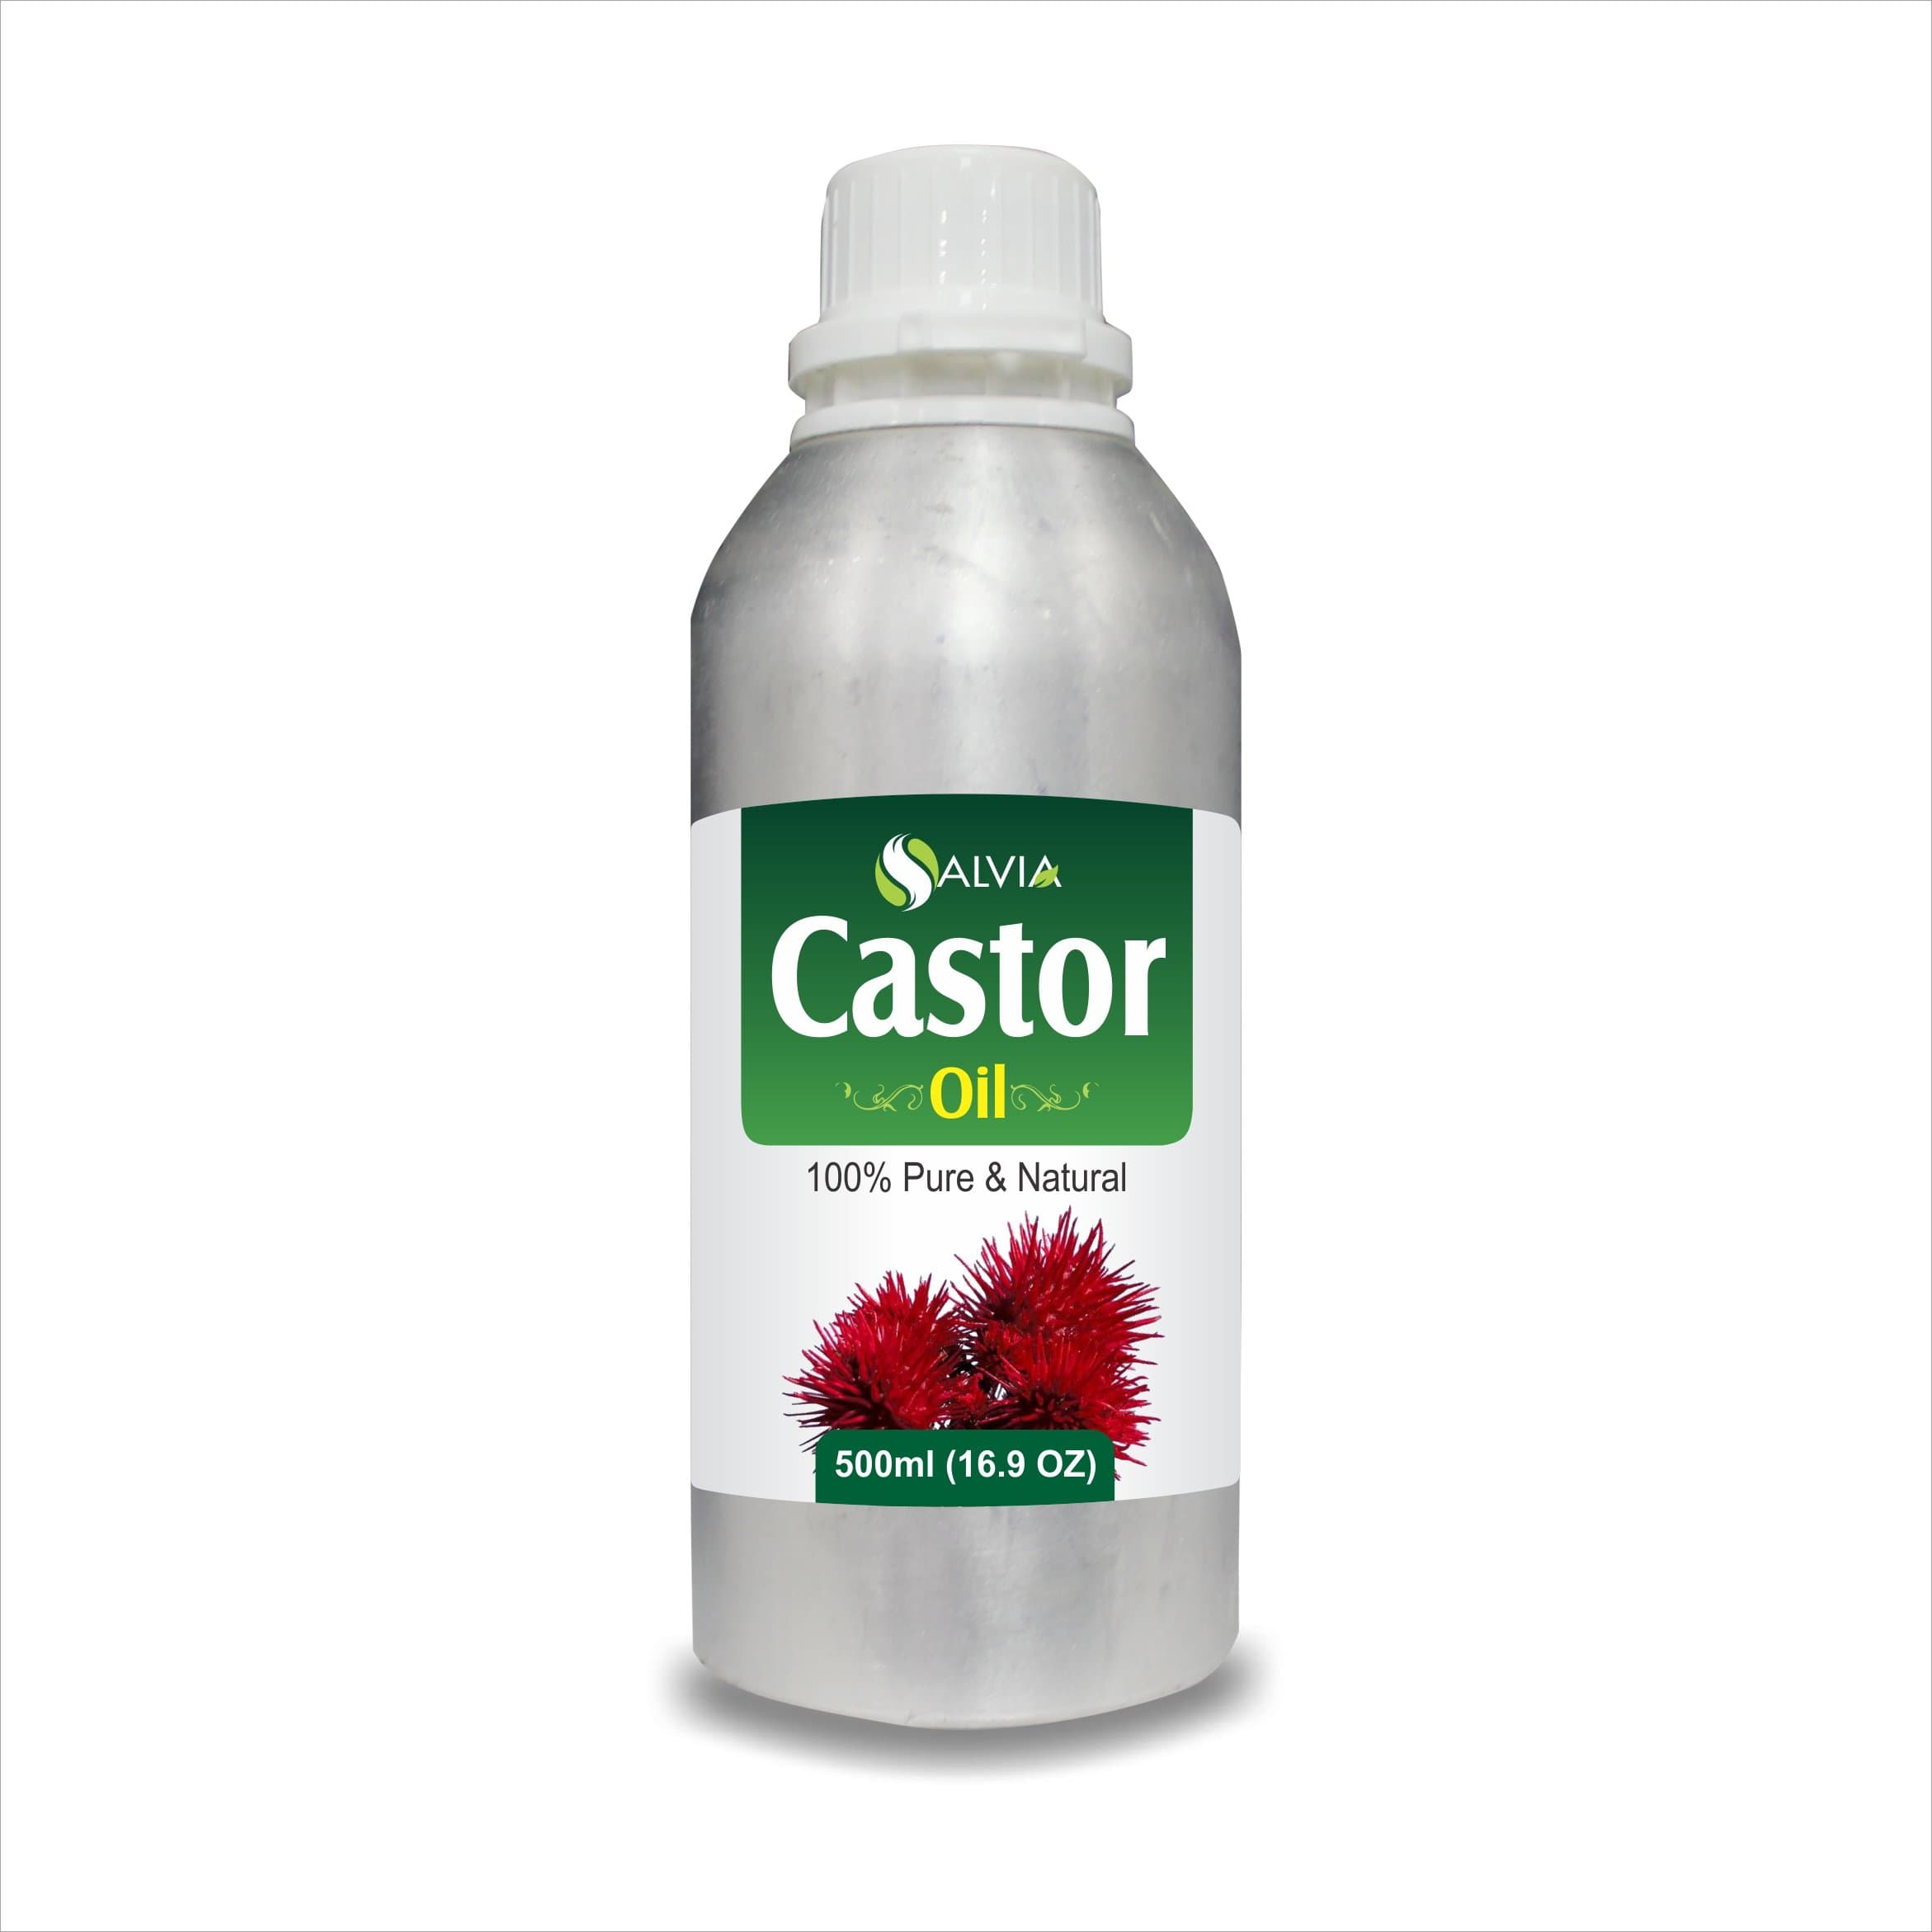 castor oil for hair - Shoprythm